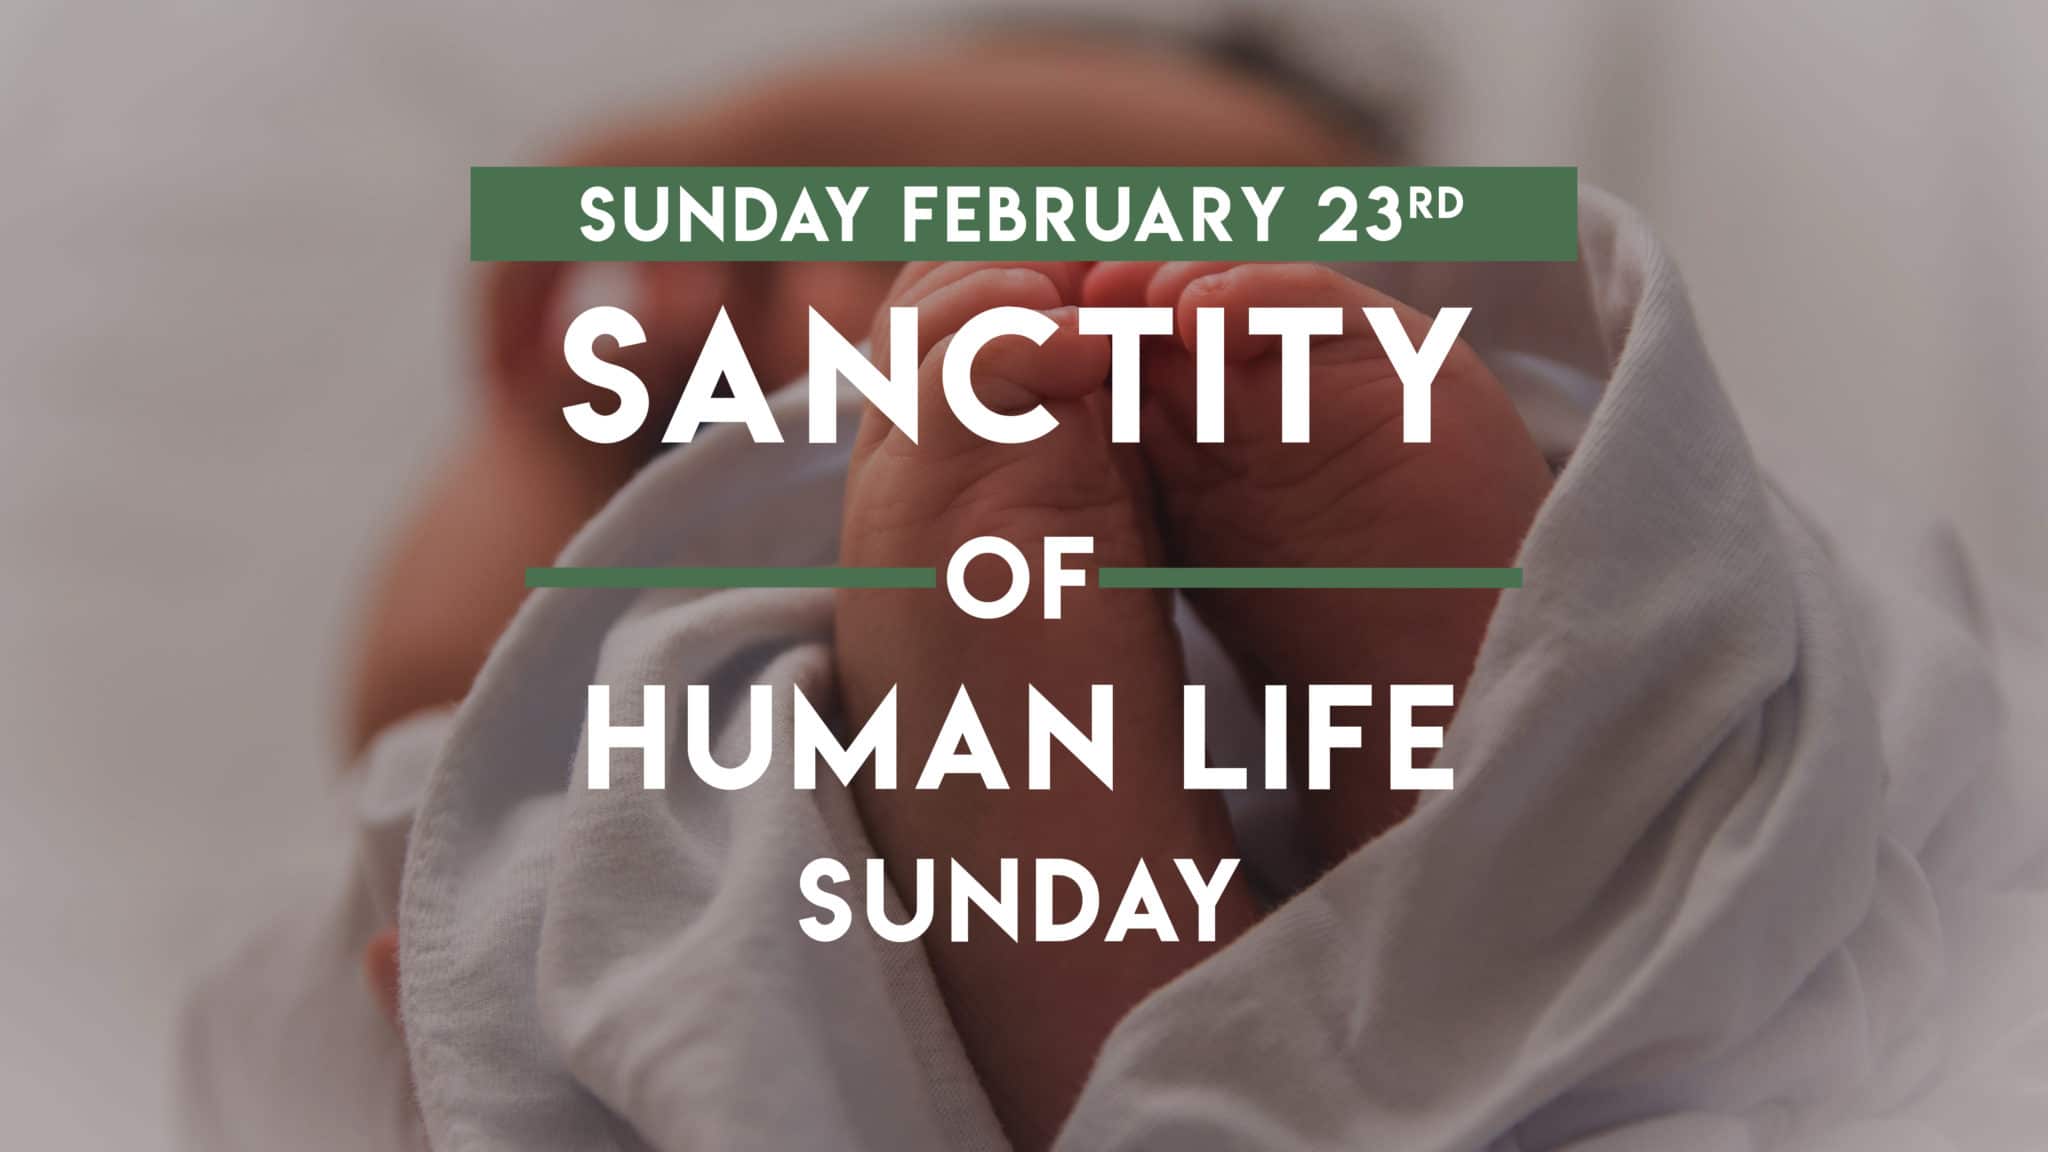 Sanctity of Human life Sunday Dauphin Way Baptist Church